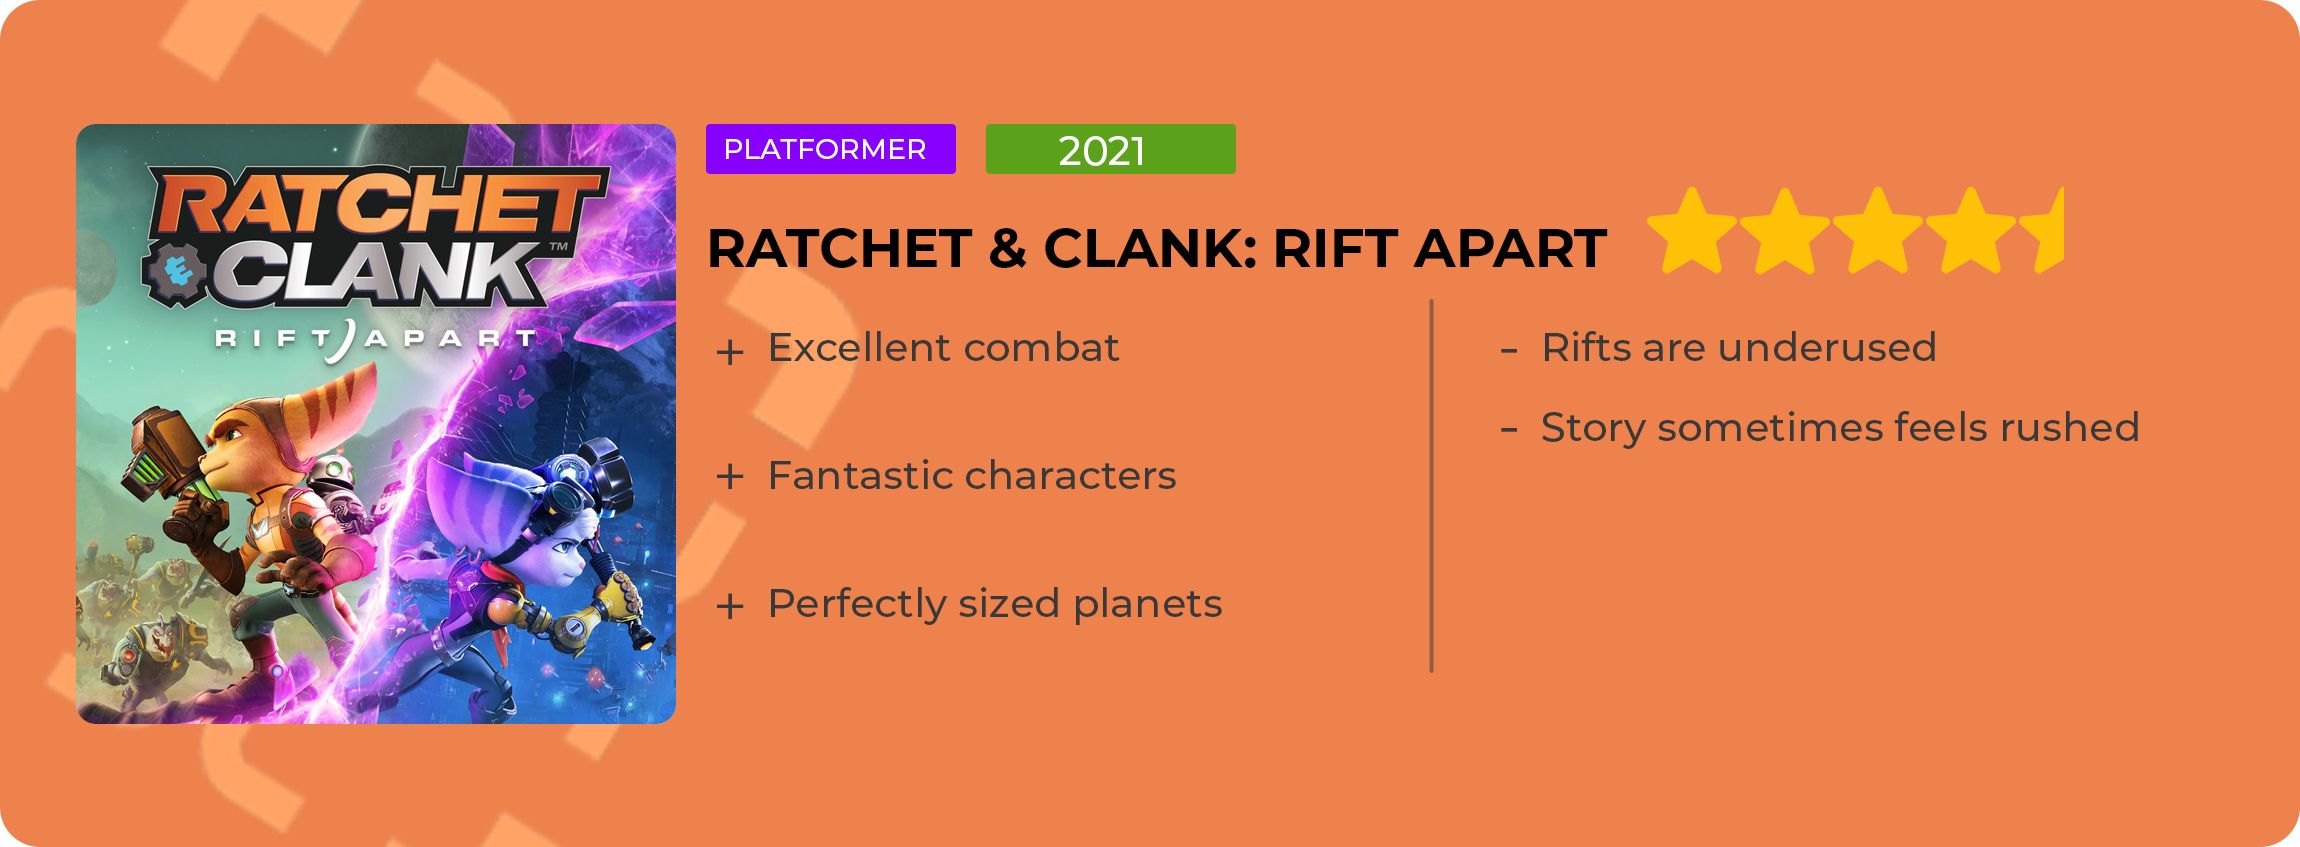 Ratchet and Clank Rift Apart Review Scorecard